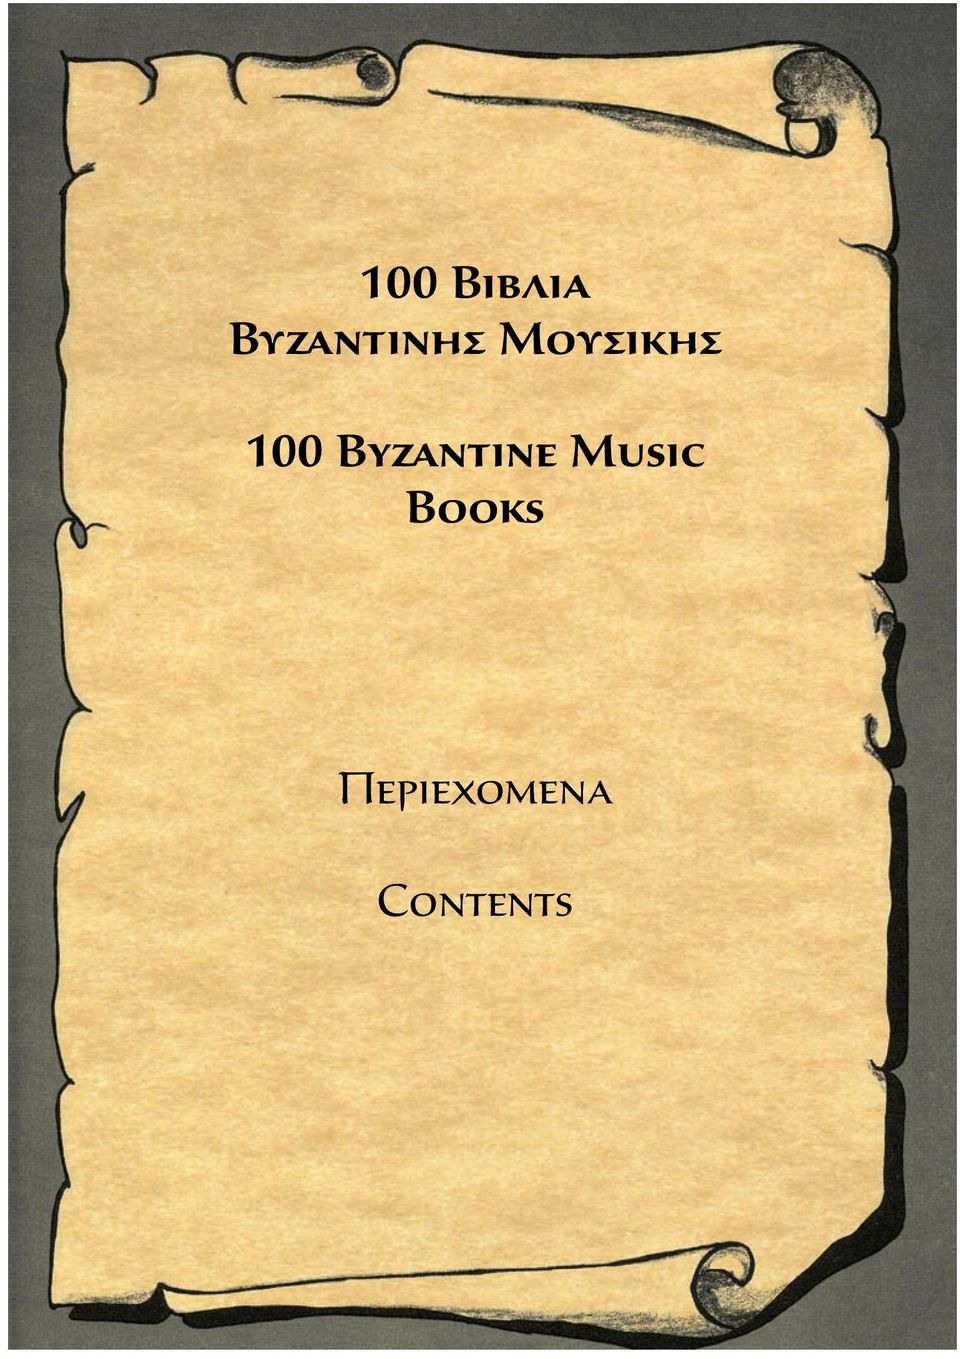 100 Byzantine Music